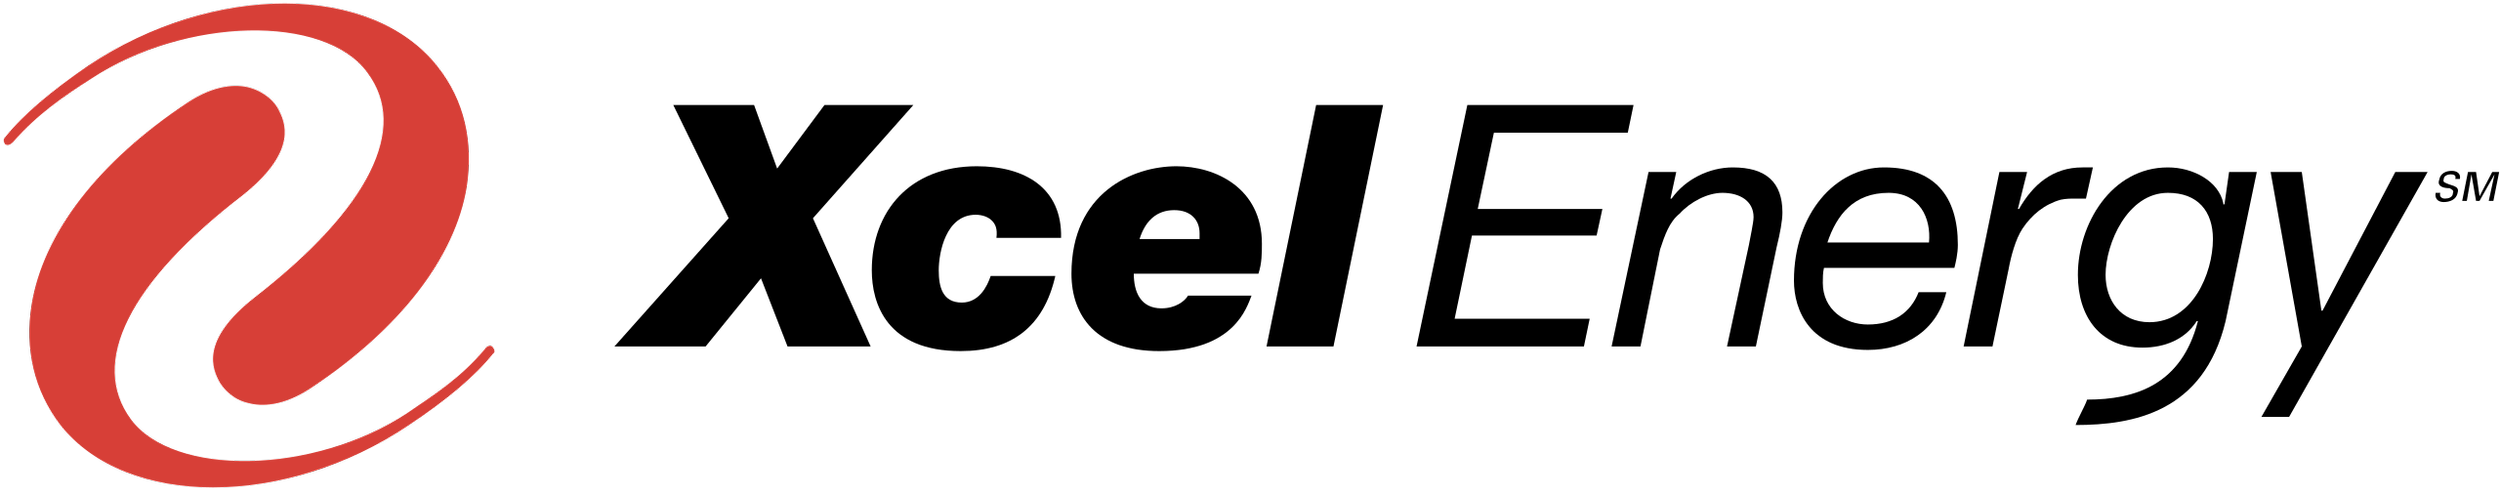 Xcel Energy Logo.png